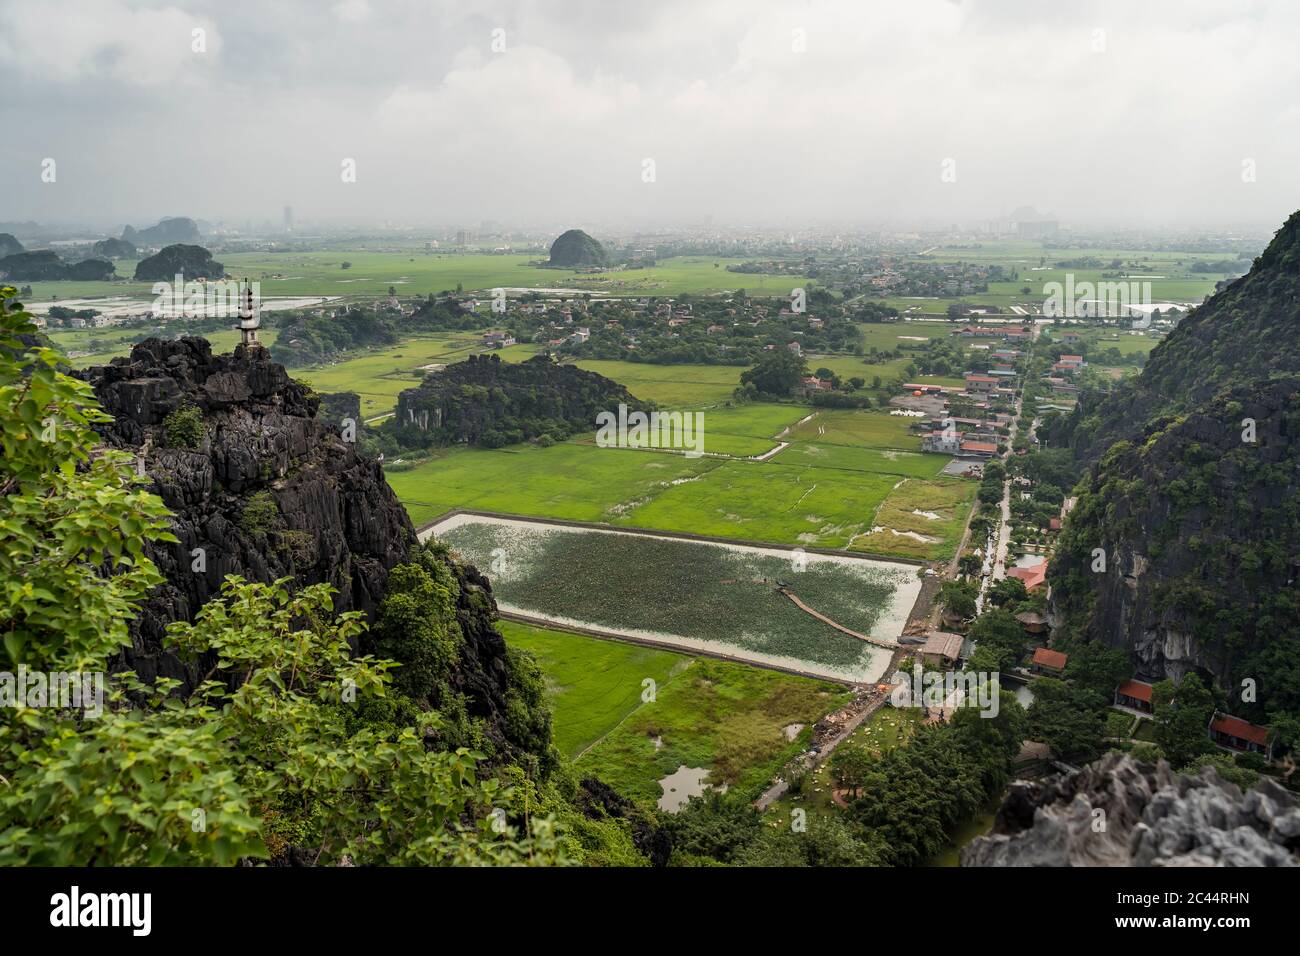 Vietnam, Ninh Binh Province, Ninh Binh, Rice paddy in Hong River Delta Stock Photo